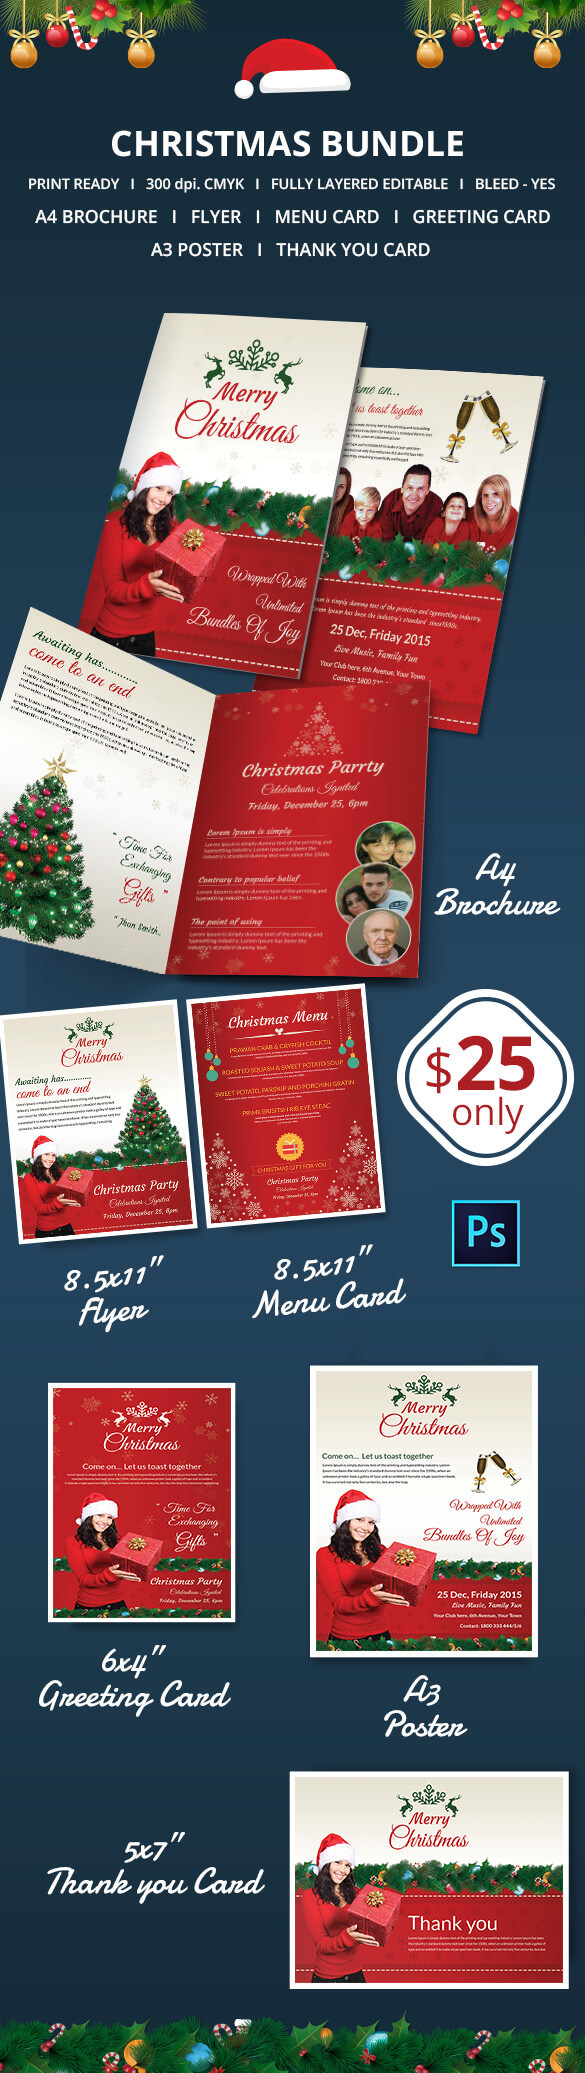 41+ Christmas Brochures Templates – Psd, Word, Publisher Throughout Christmas Brochure Templates Free